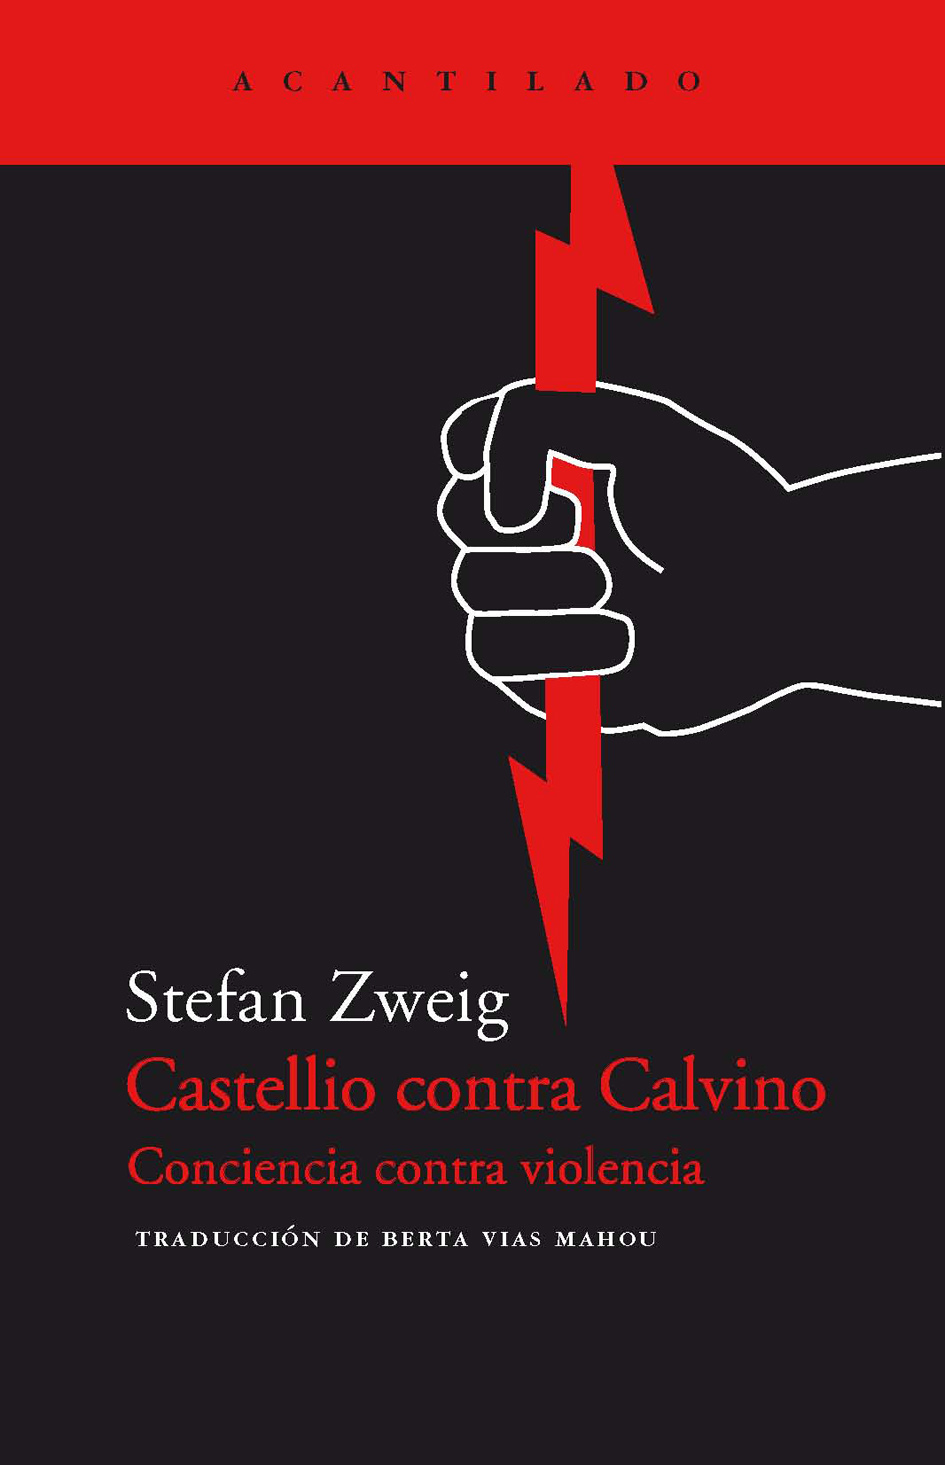 castellio contra calvino - Castellio contra Calvino. Conciencia contra violencia (Stefan Zweig) (229.62 MB) - (Audiolibro Voz Humana)